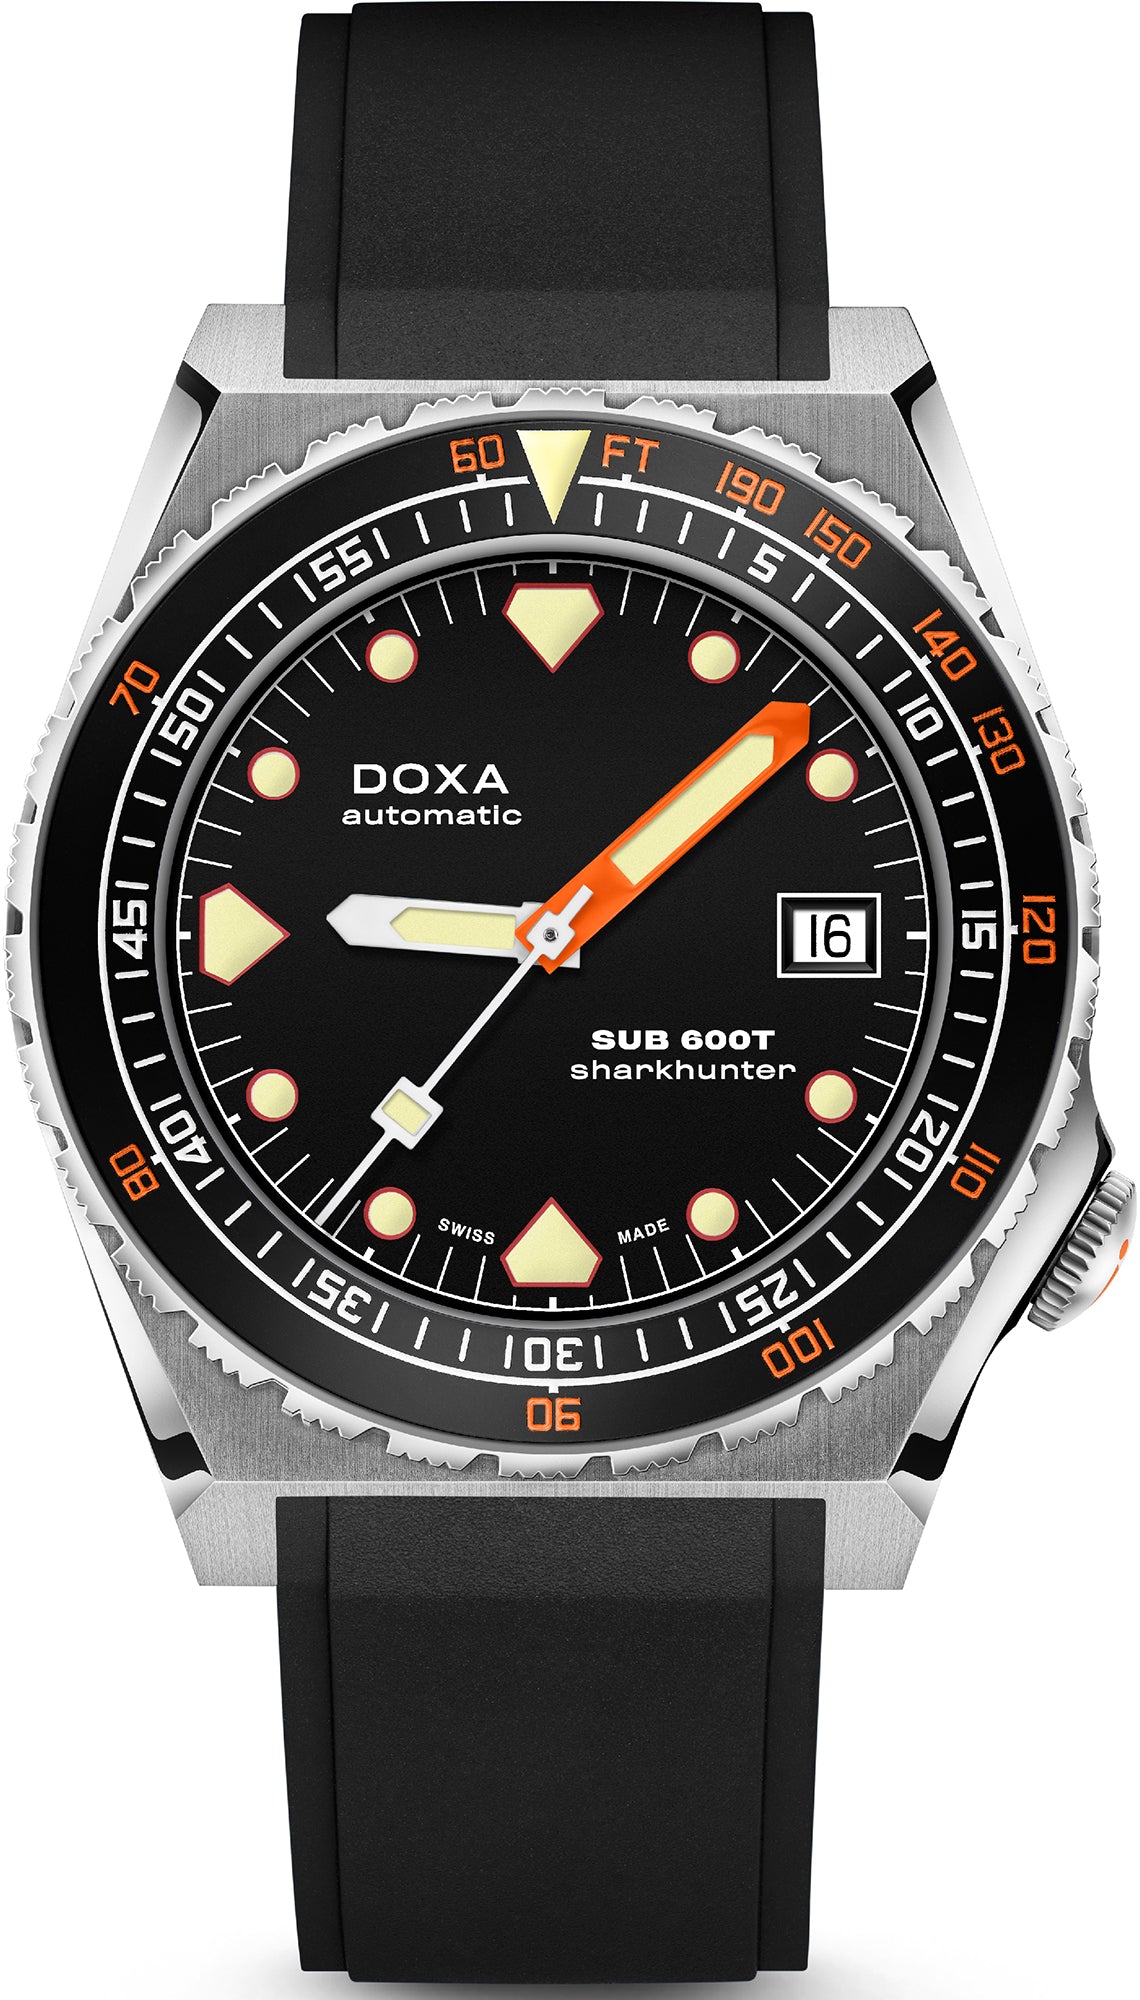 Photos - Wrist Watch DOXA Watch SUB 600T Sharkhunter Rubber DOX-134 